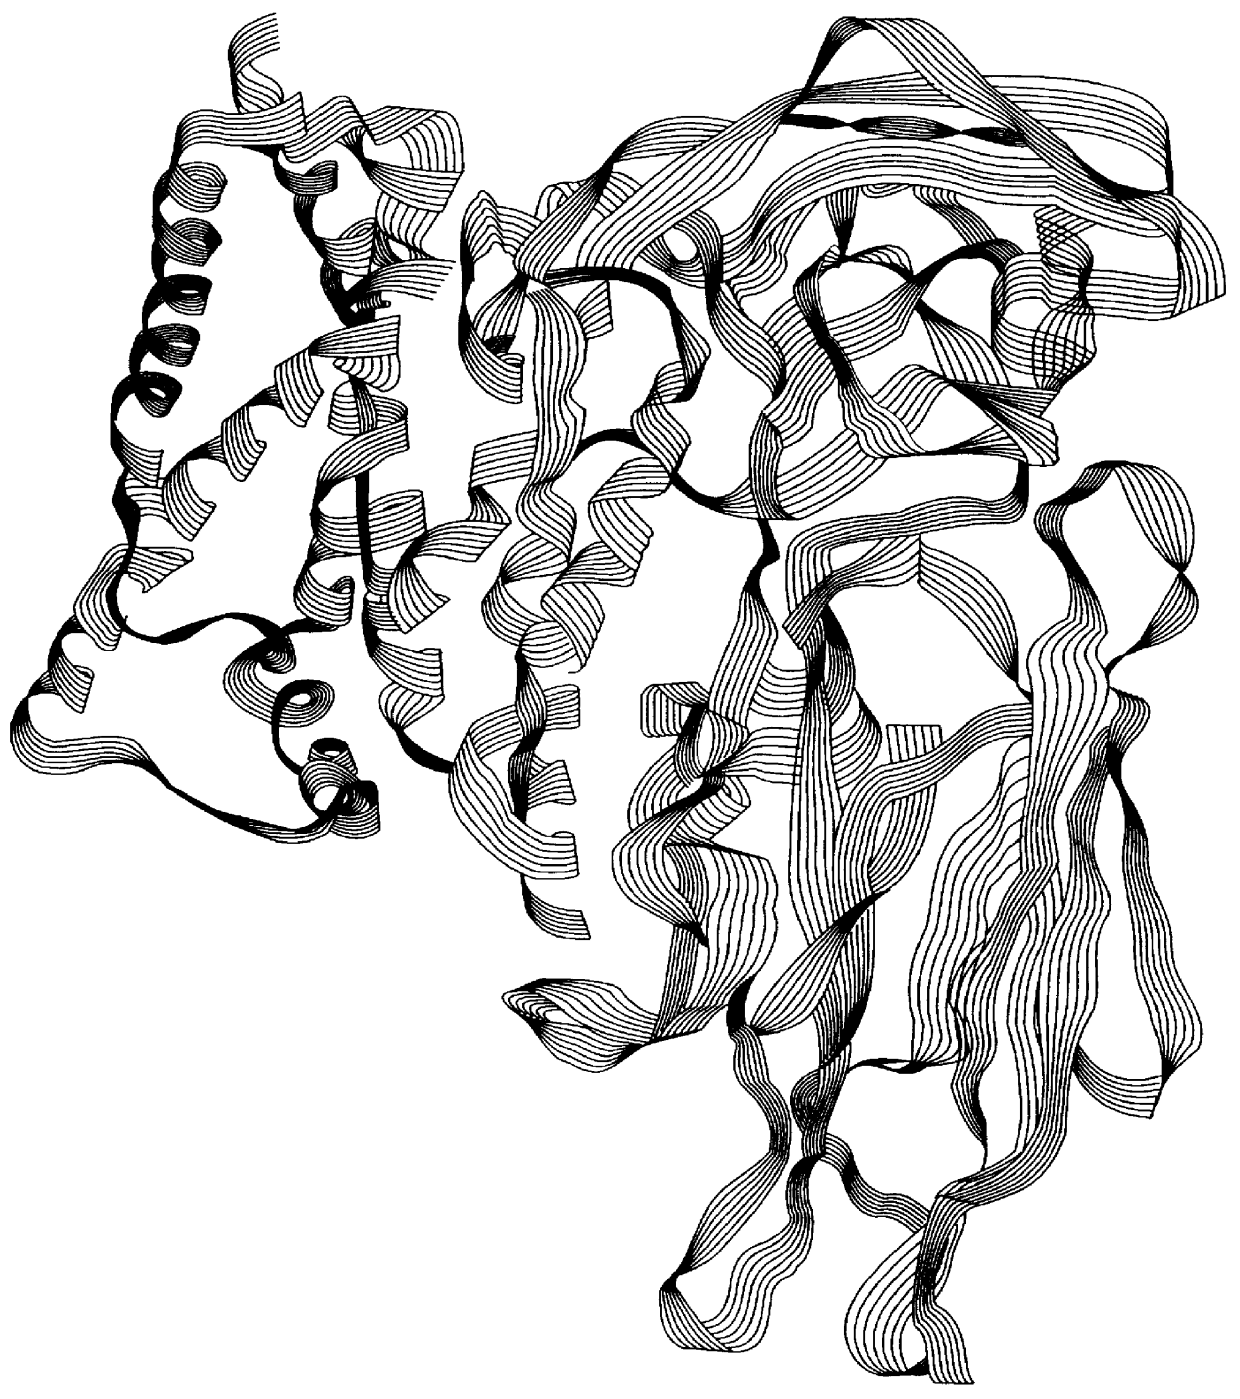 Nucleic acid segments encoding modified bacillus thuringiensis coleopteran-toxic crystal proteins